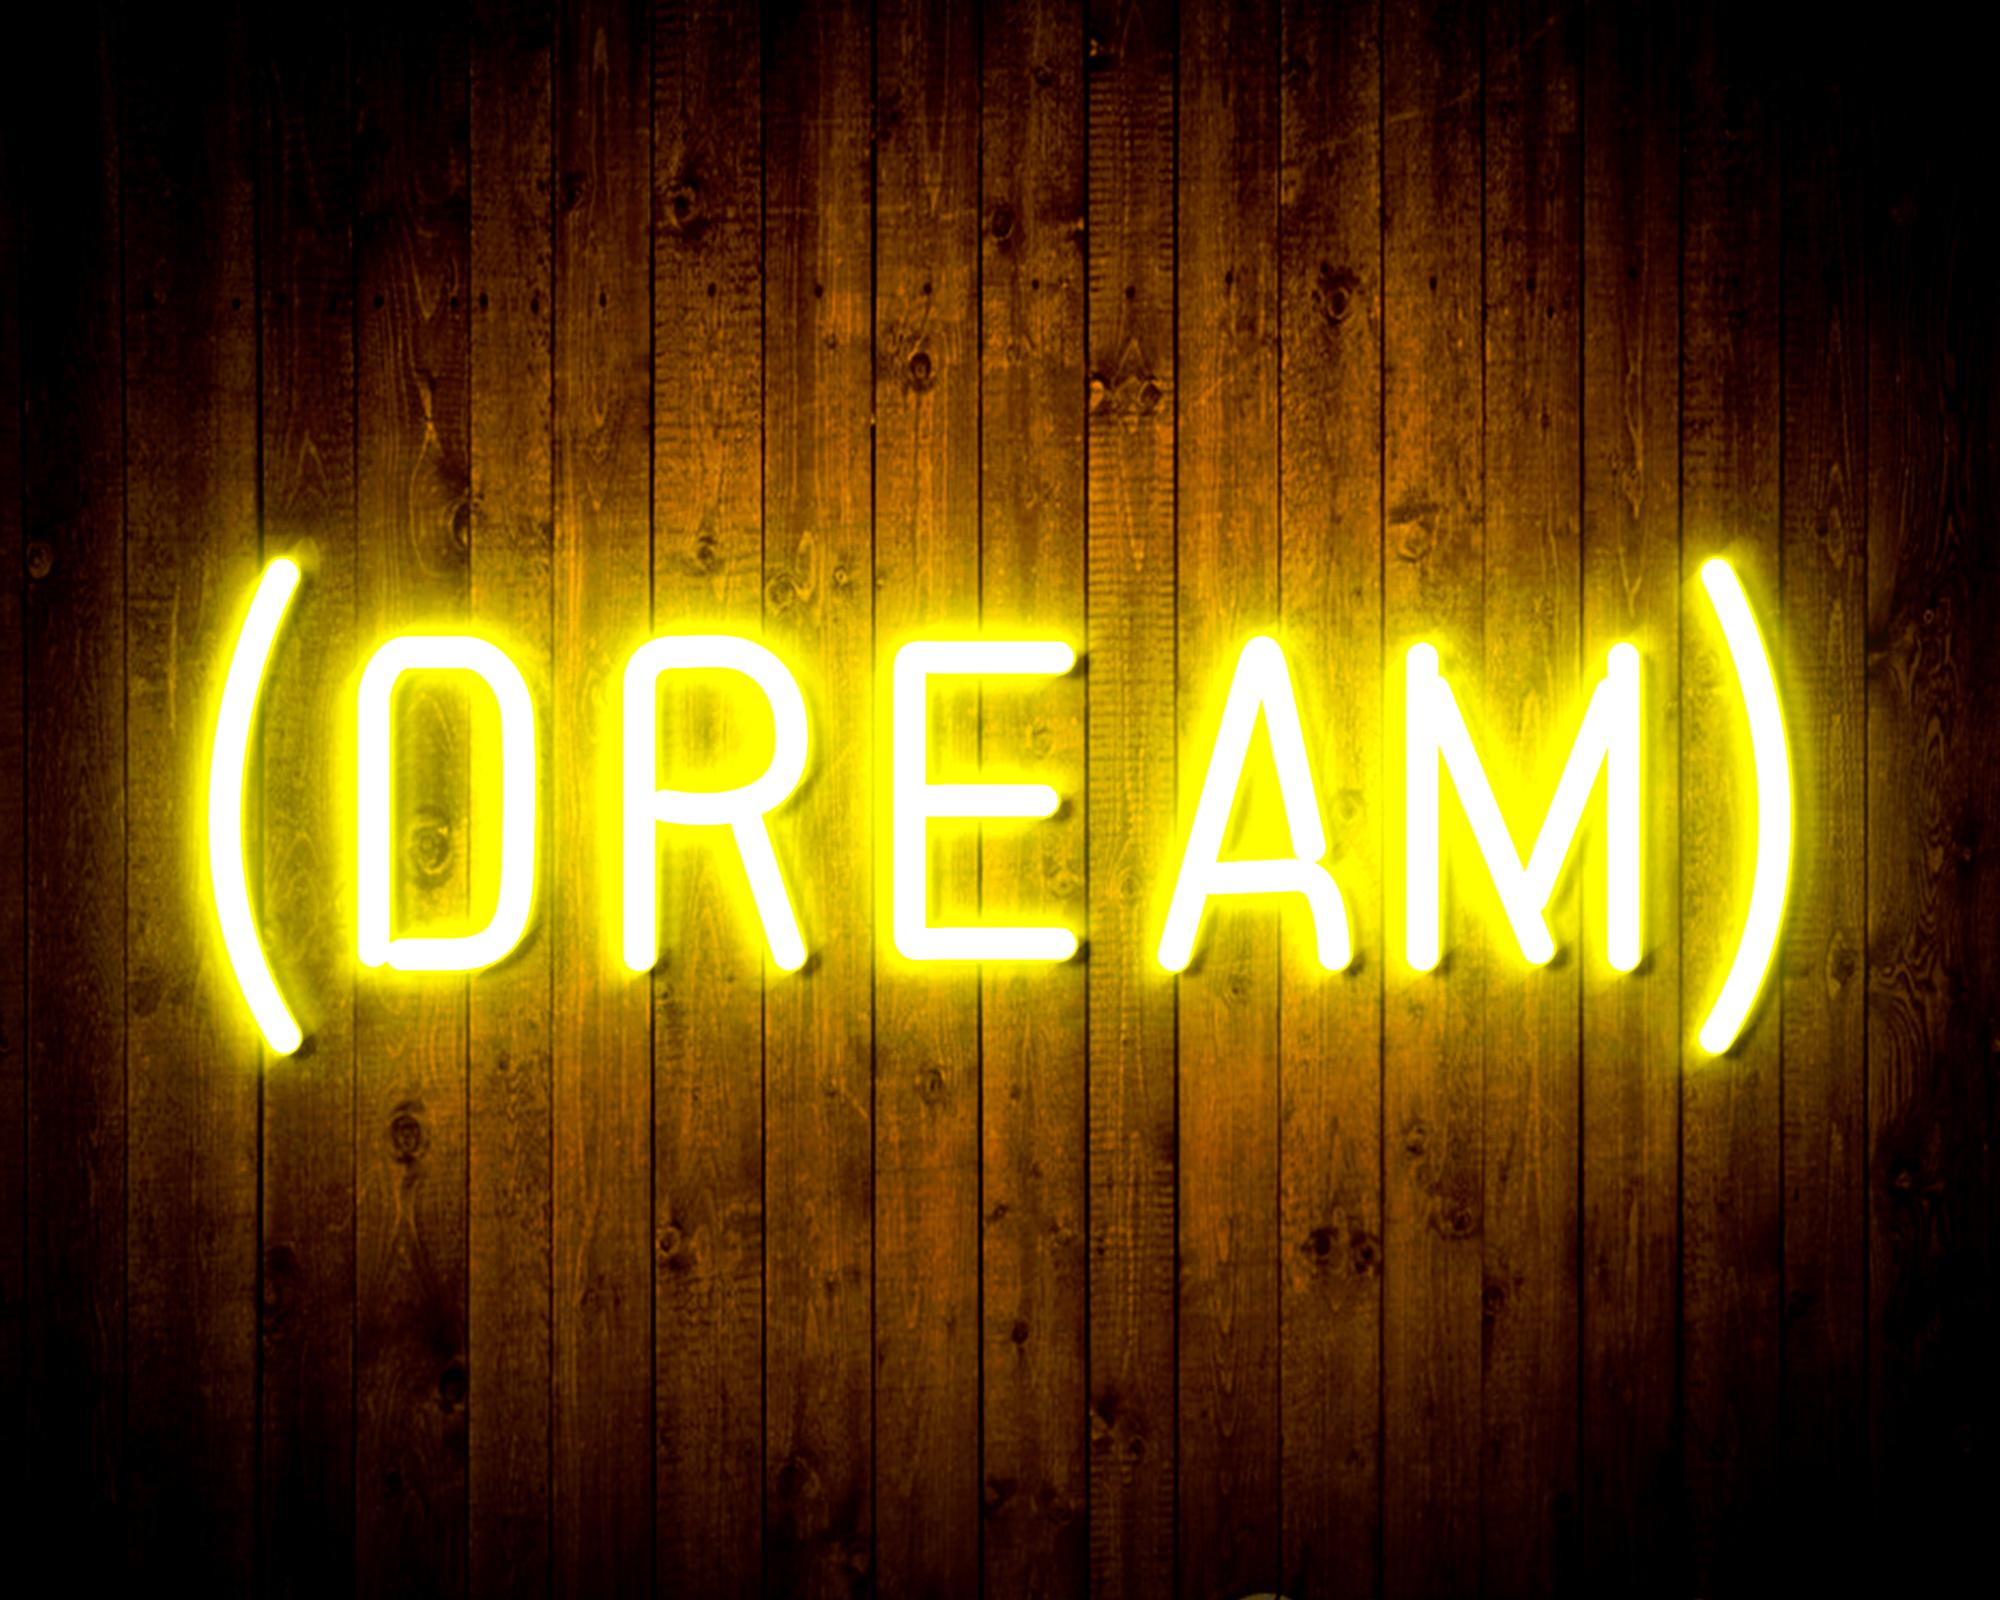 (DREAM) LED Neon Sign Wall Light